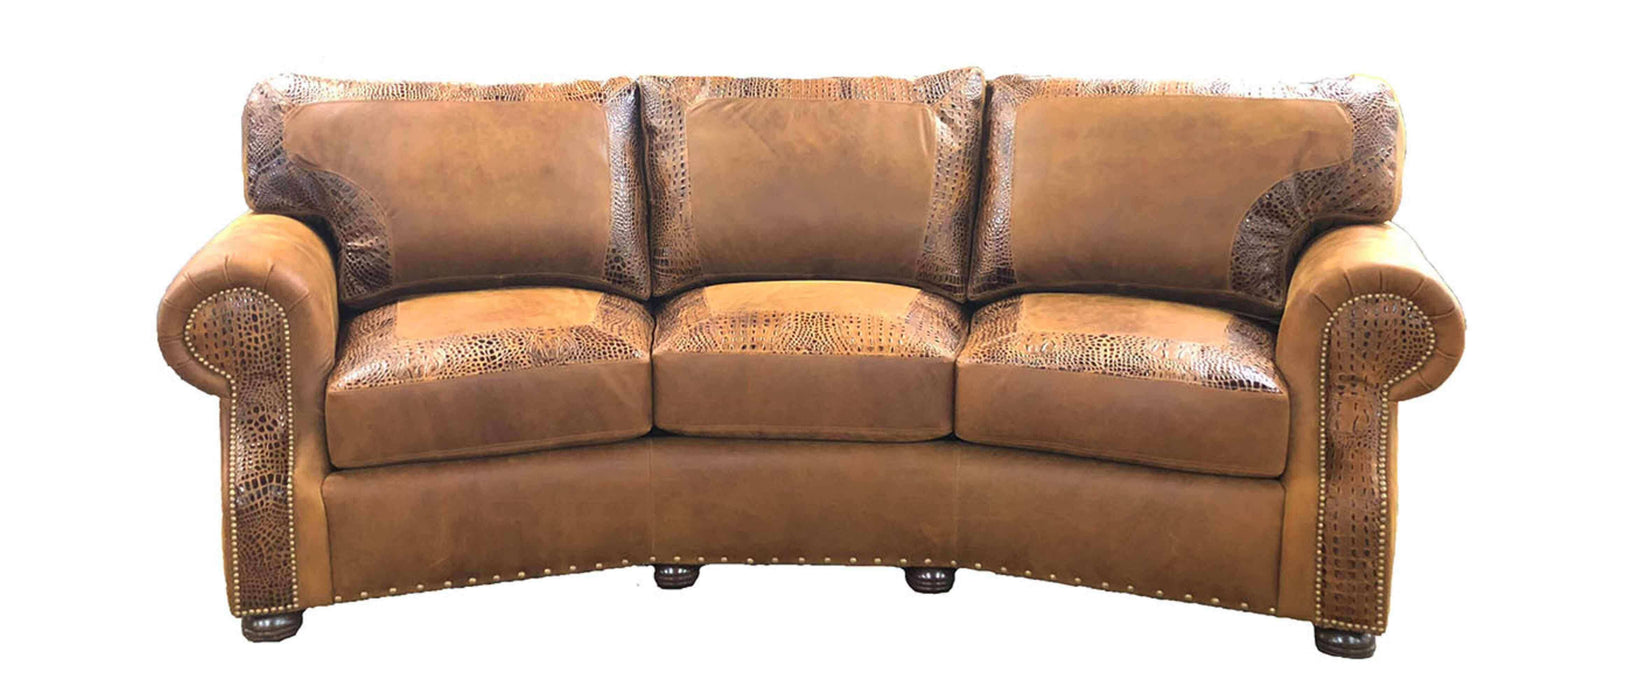 Foster Leather Conversation Sofa